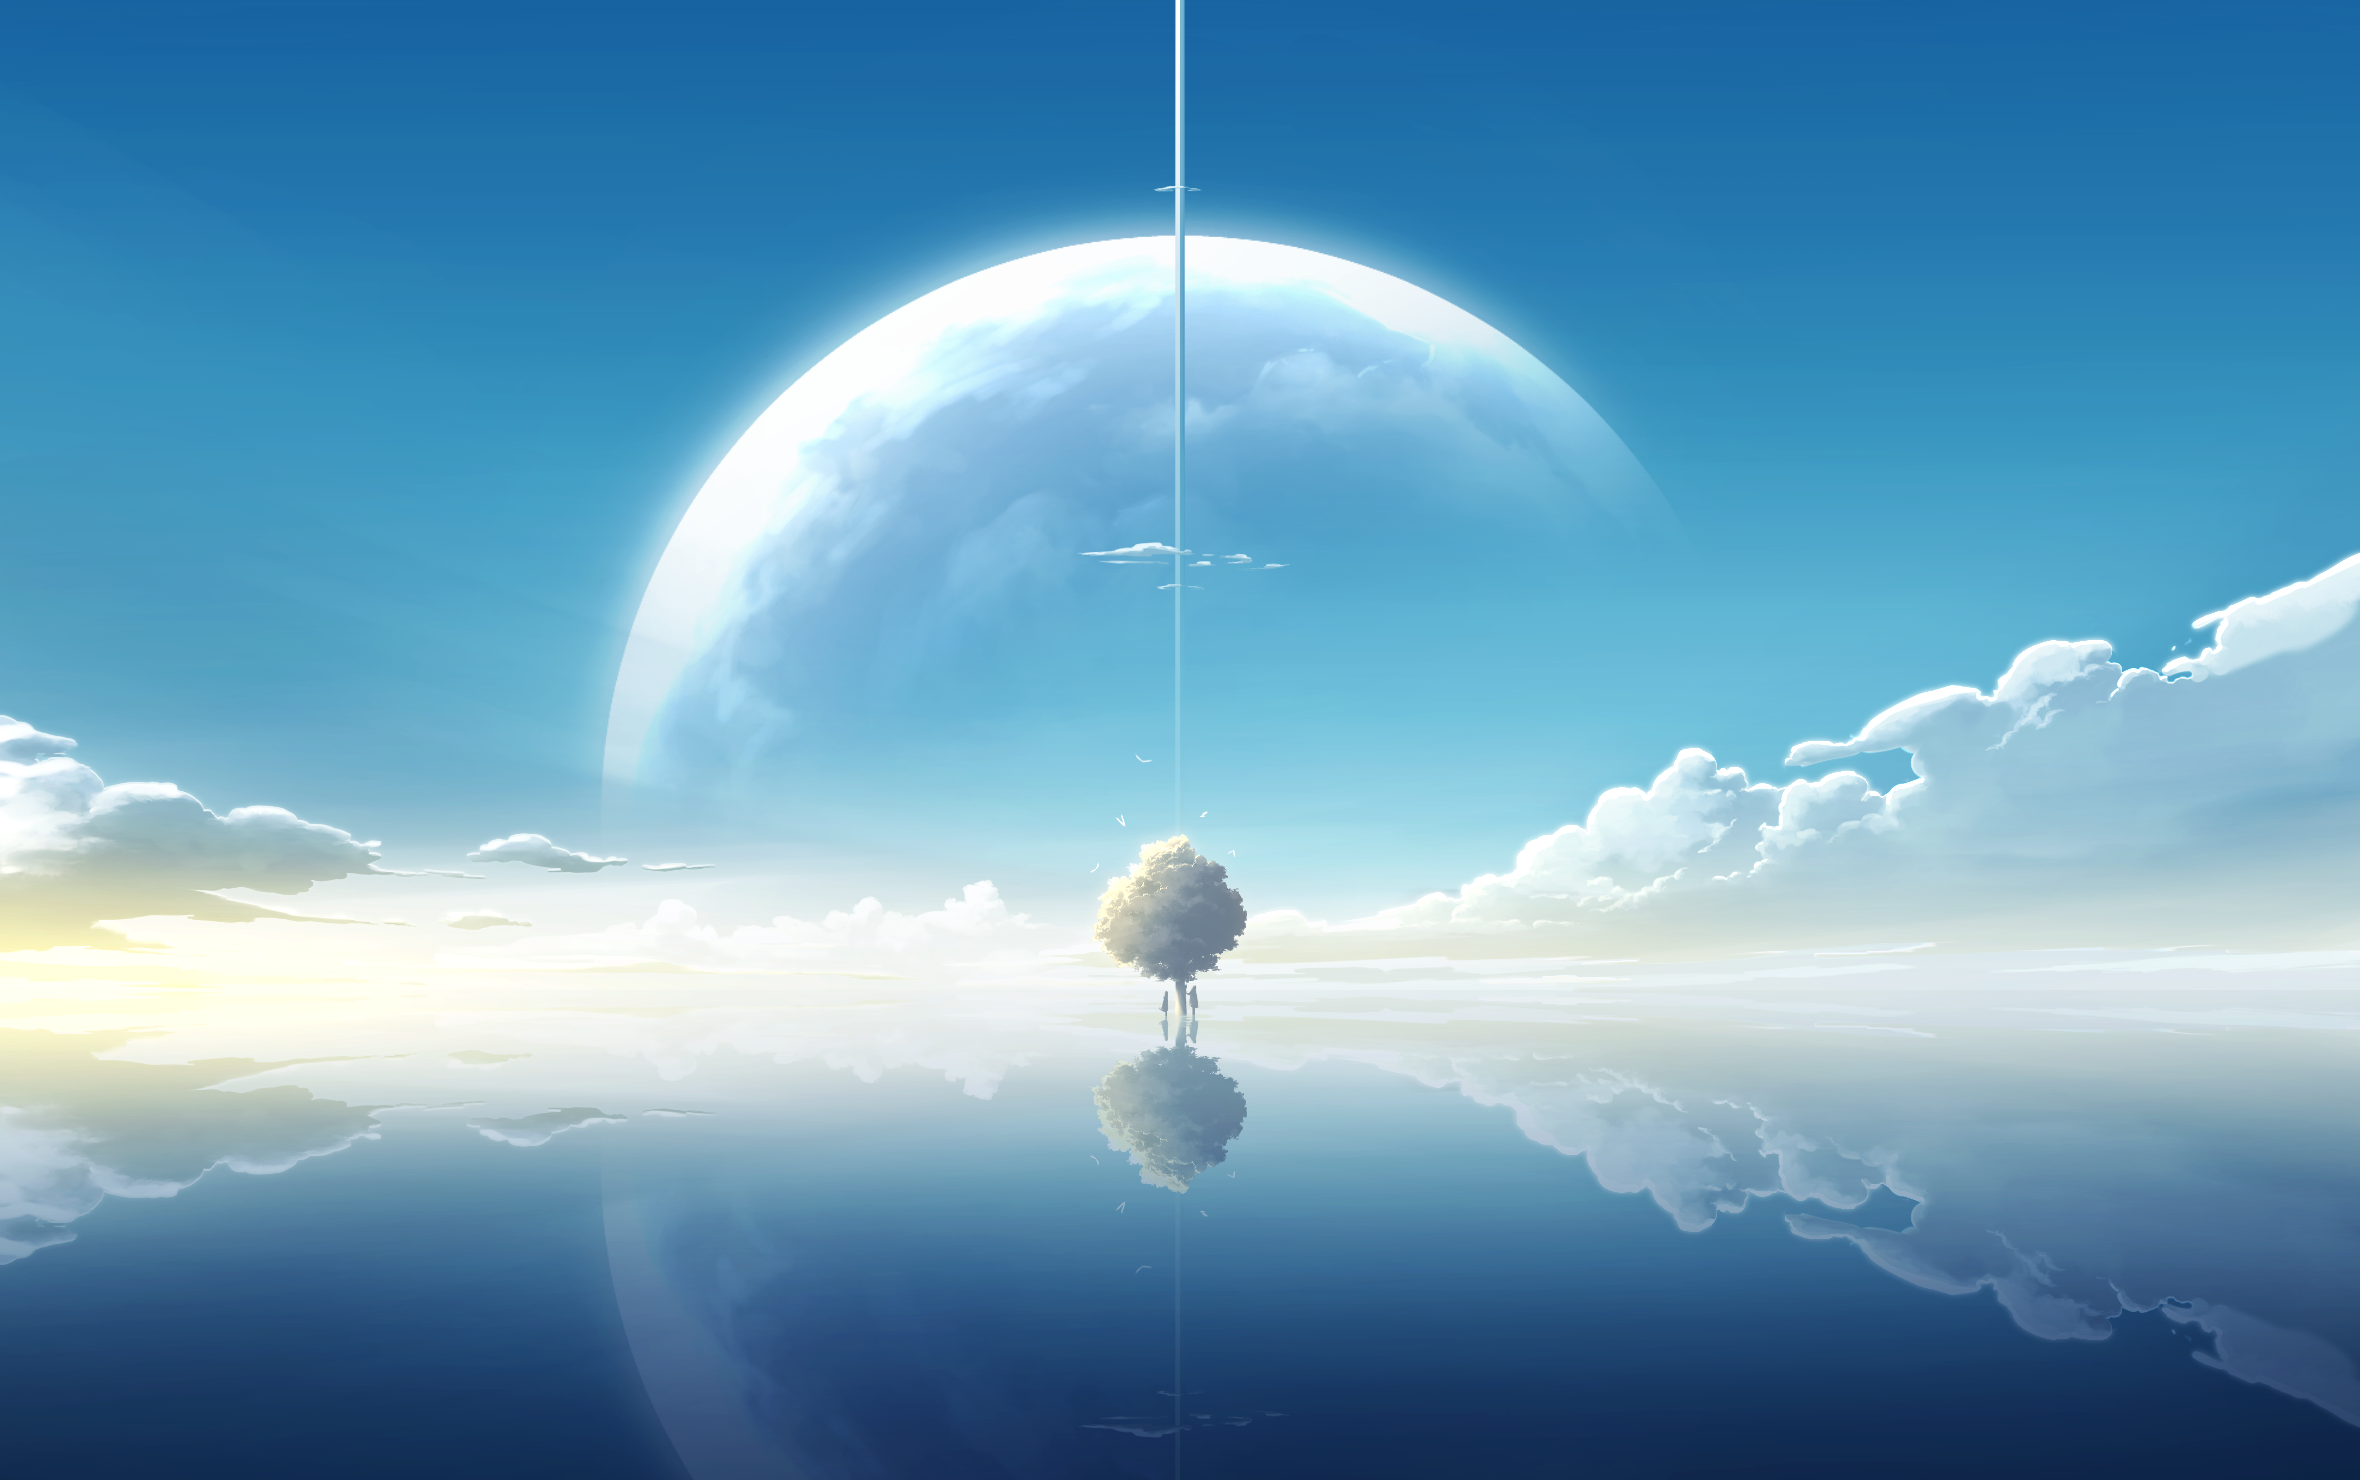 General 2360x1480 Nengoro digital art artwork illustration clouds reflection planet minimalism simple background sky